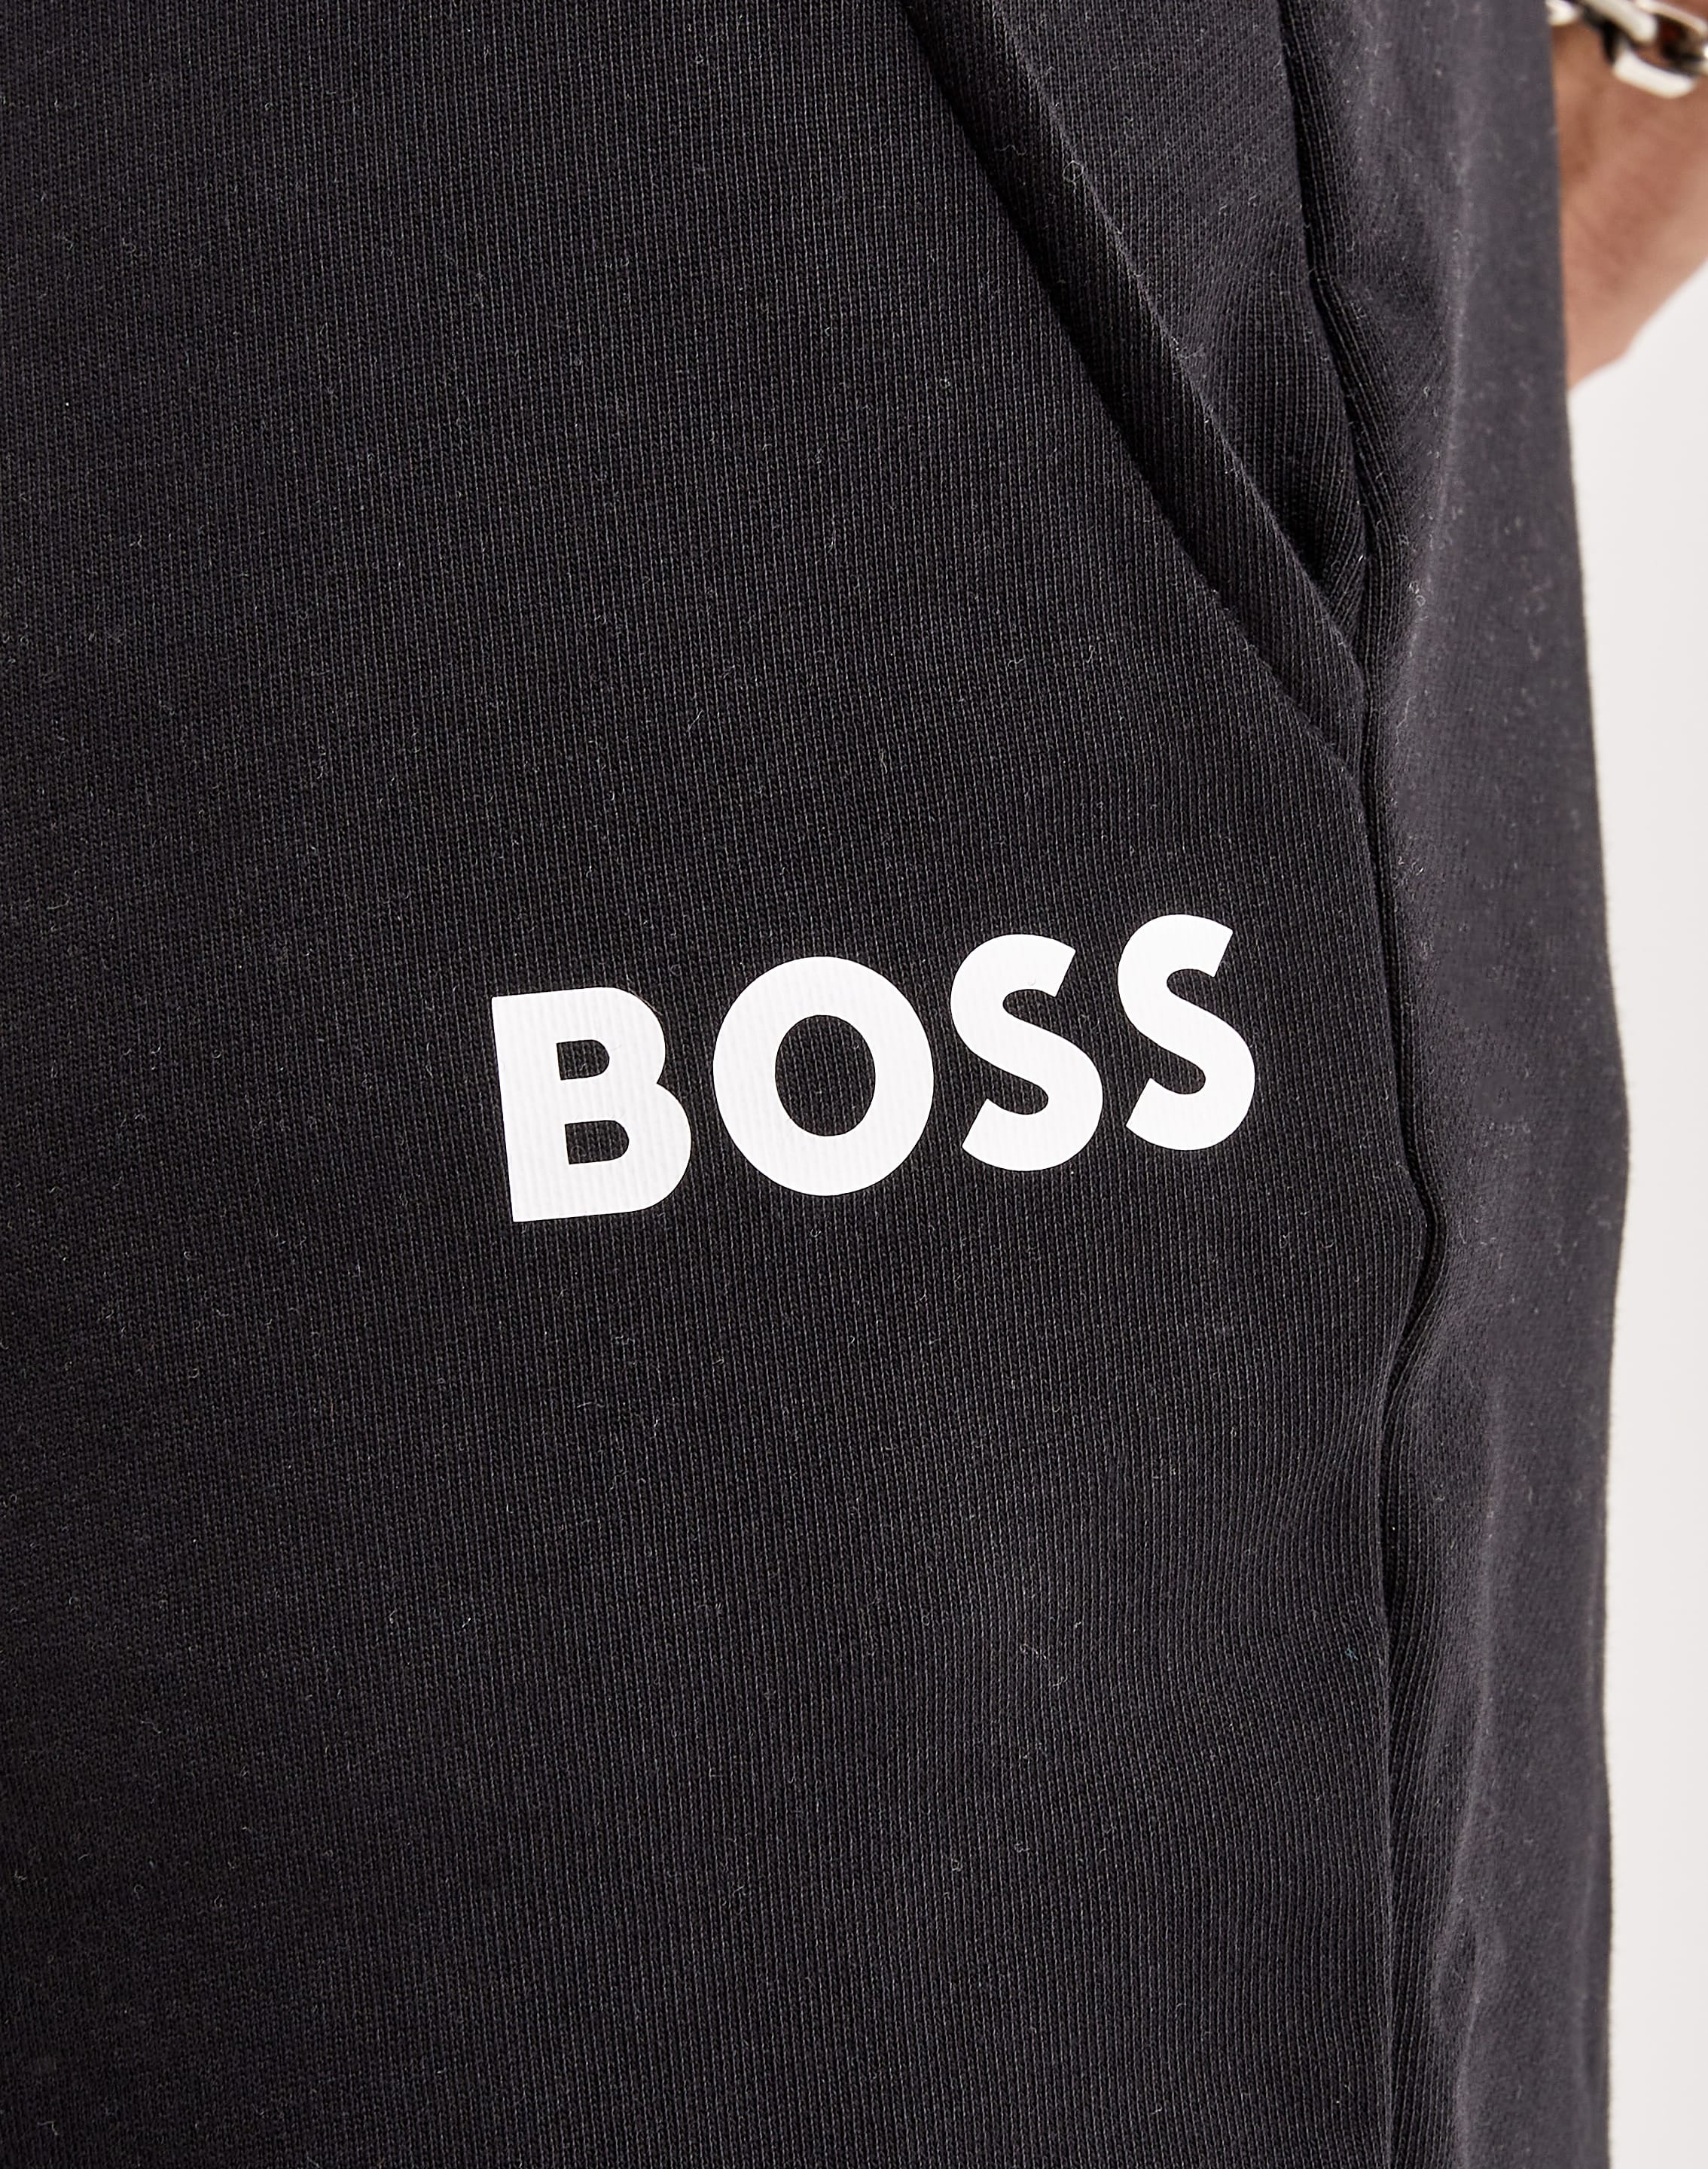 – Boss Fashion Pants DTLR